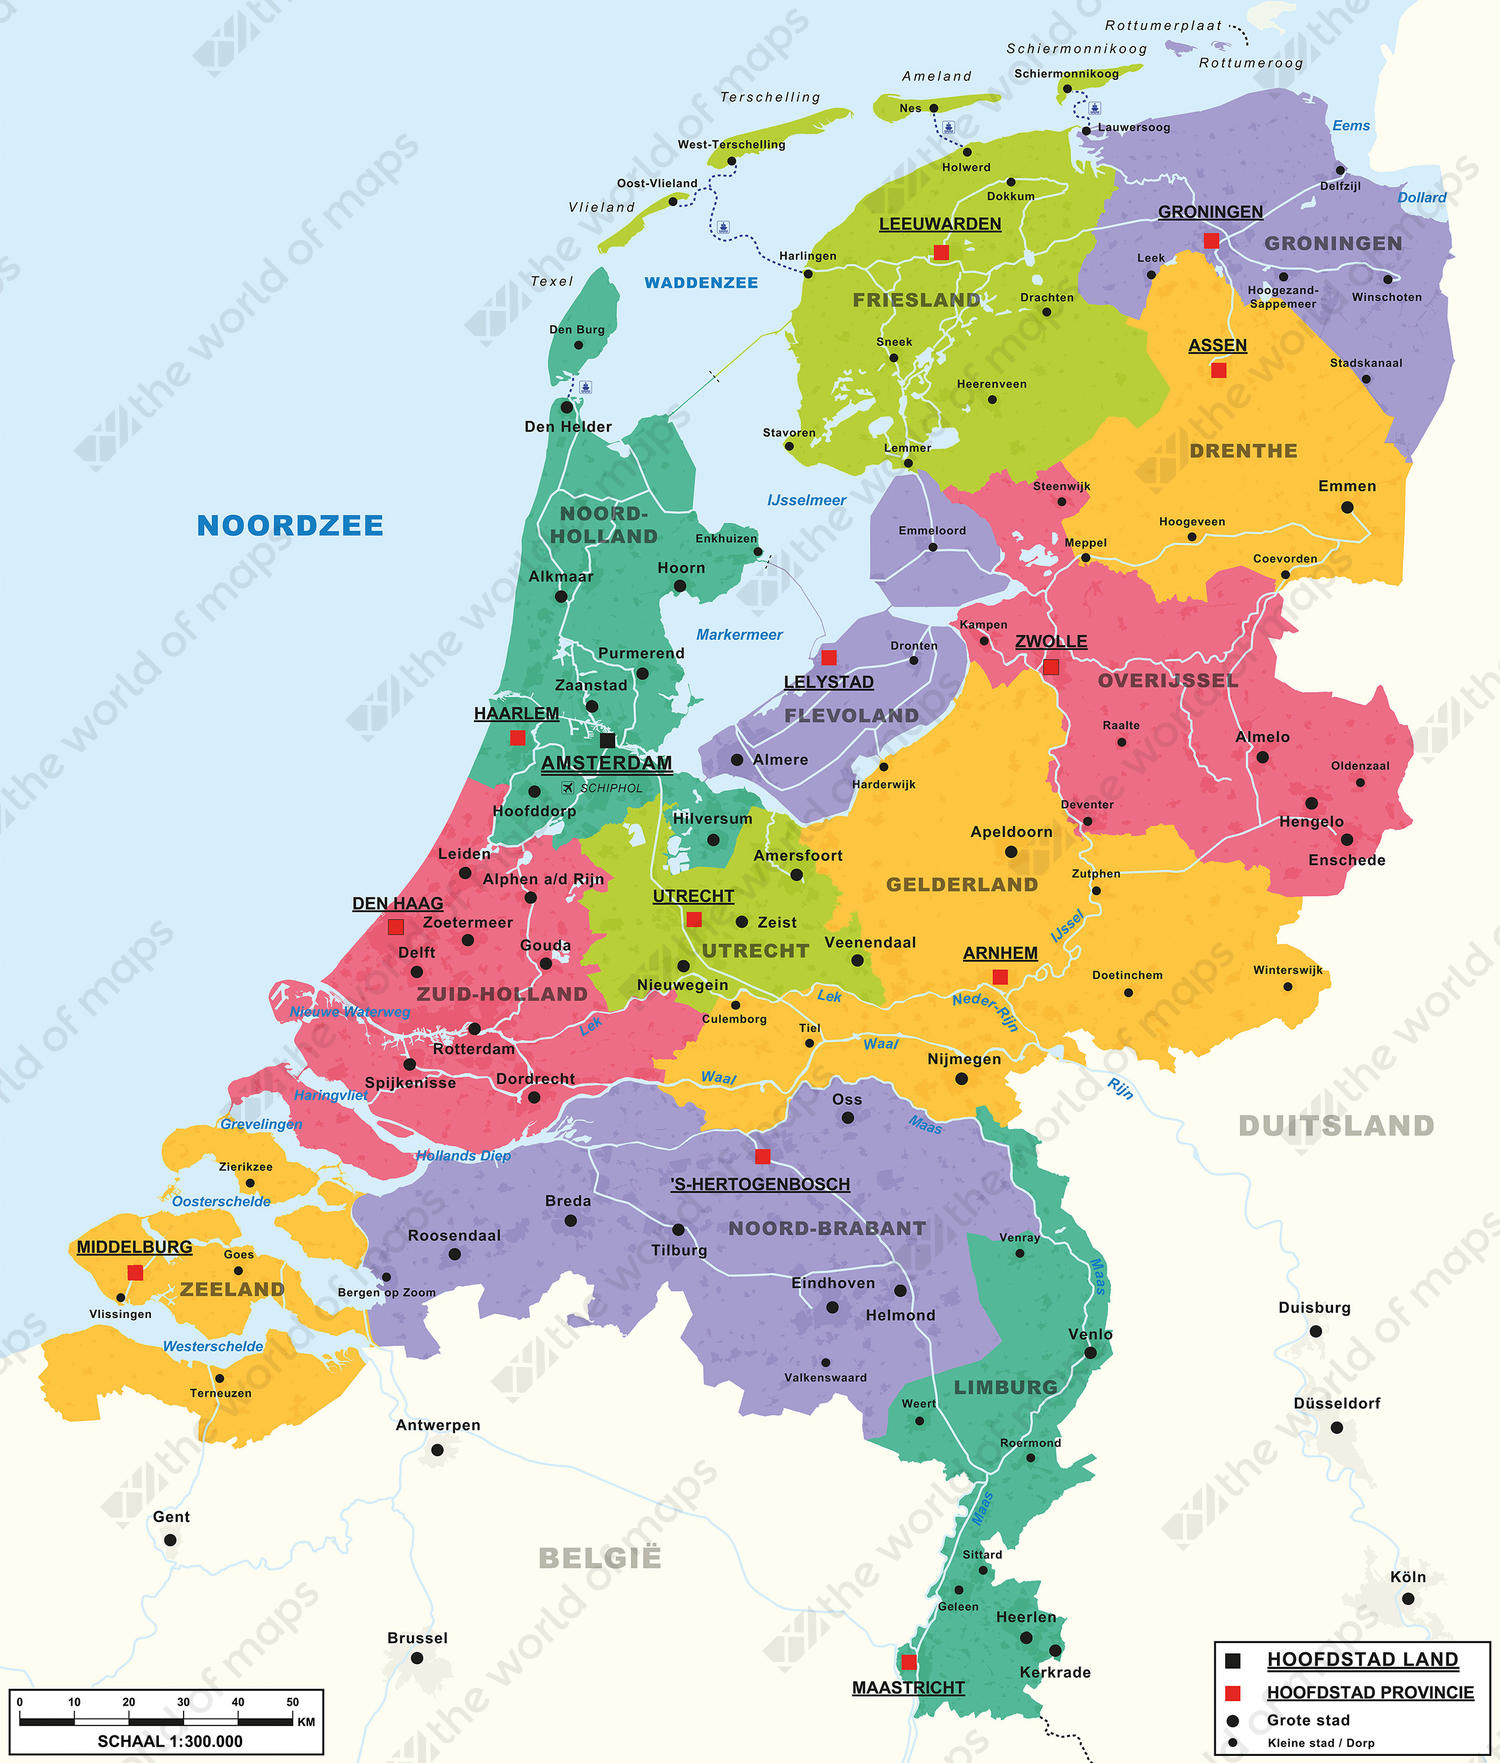 Digital basic map of the Netherlands